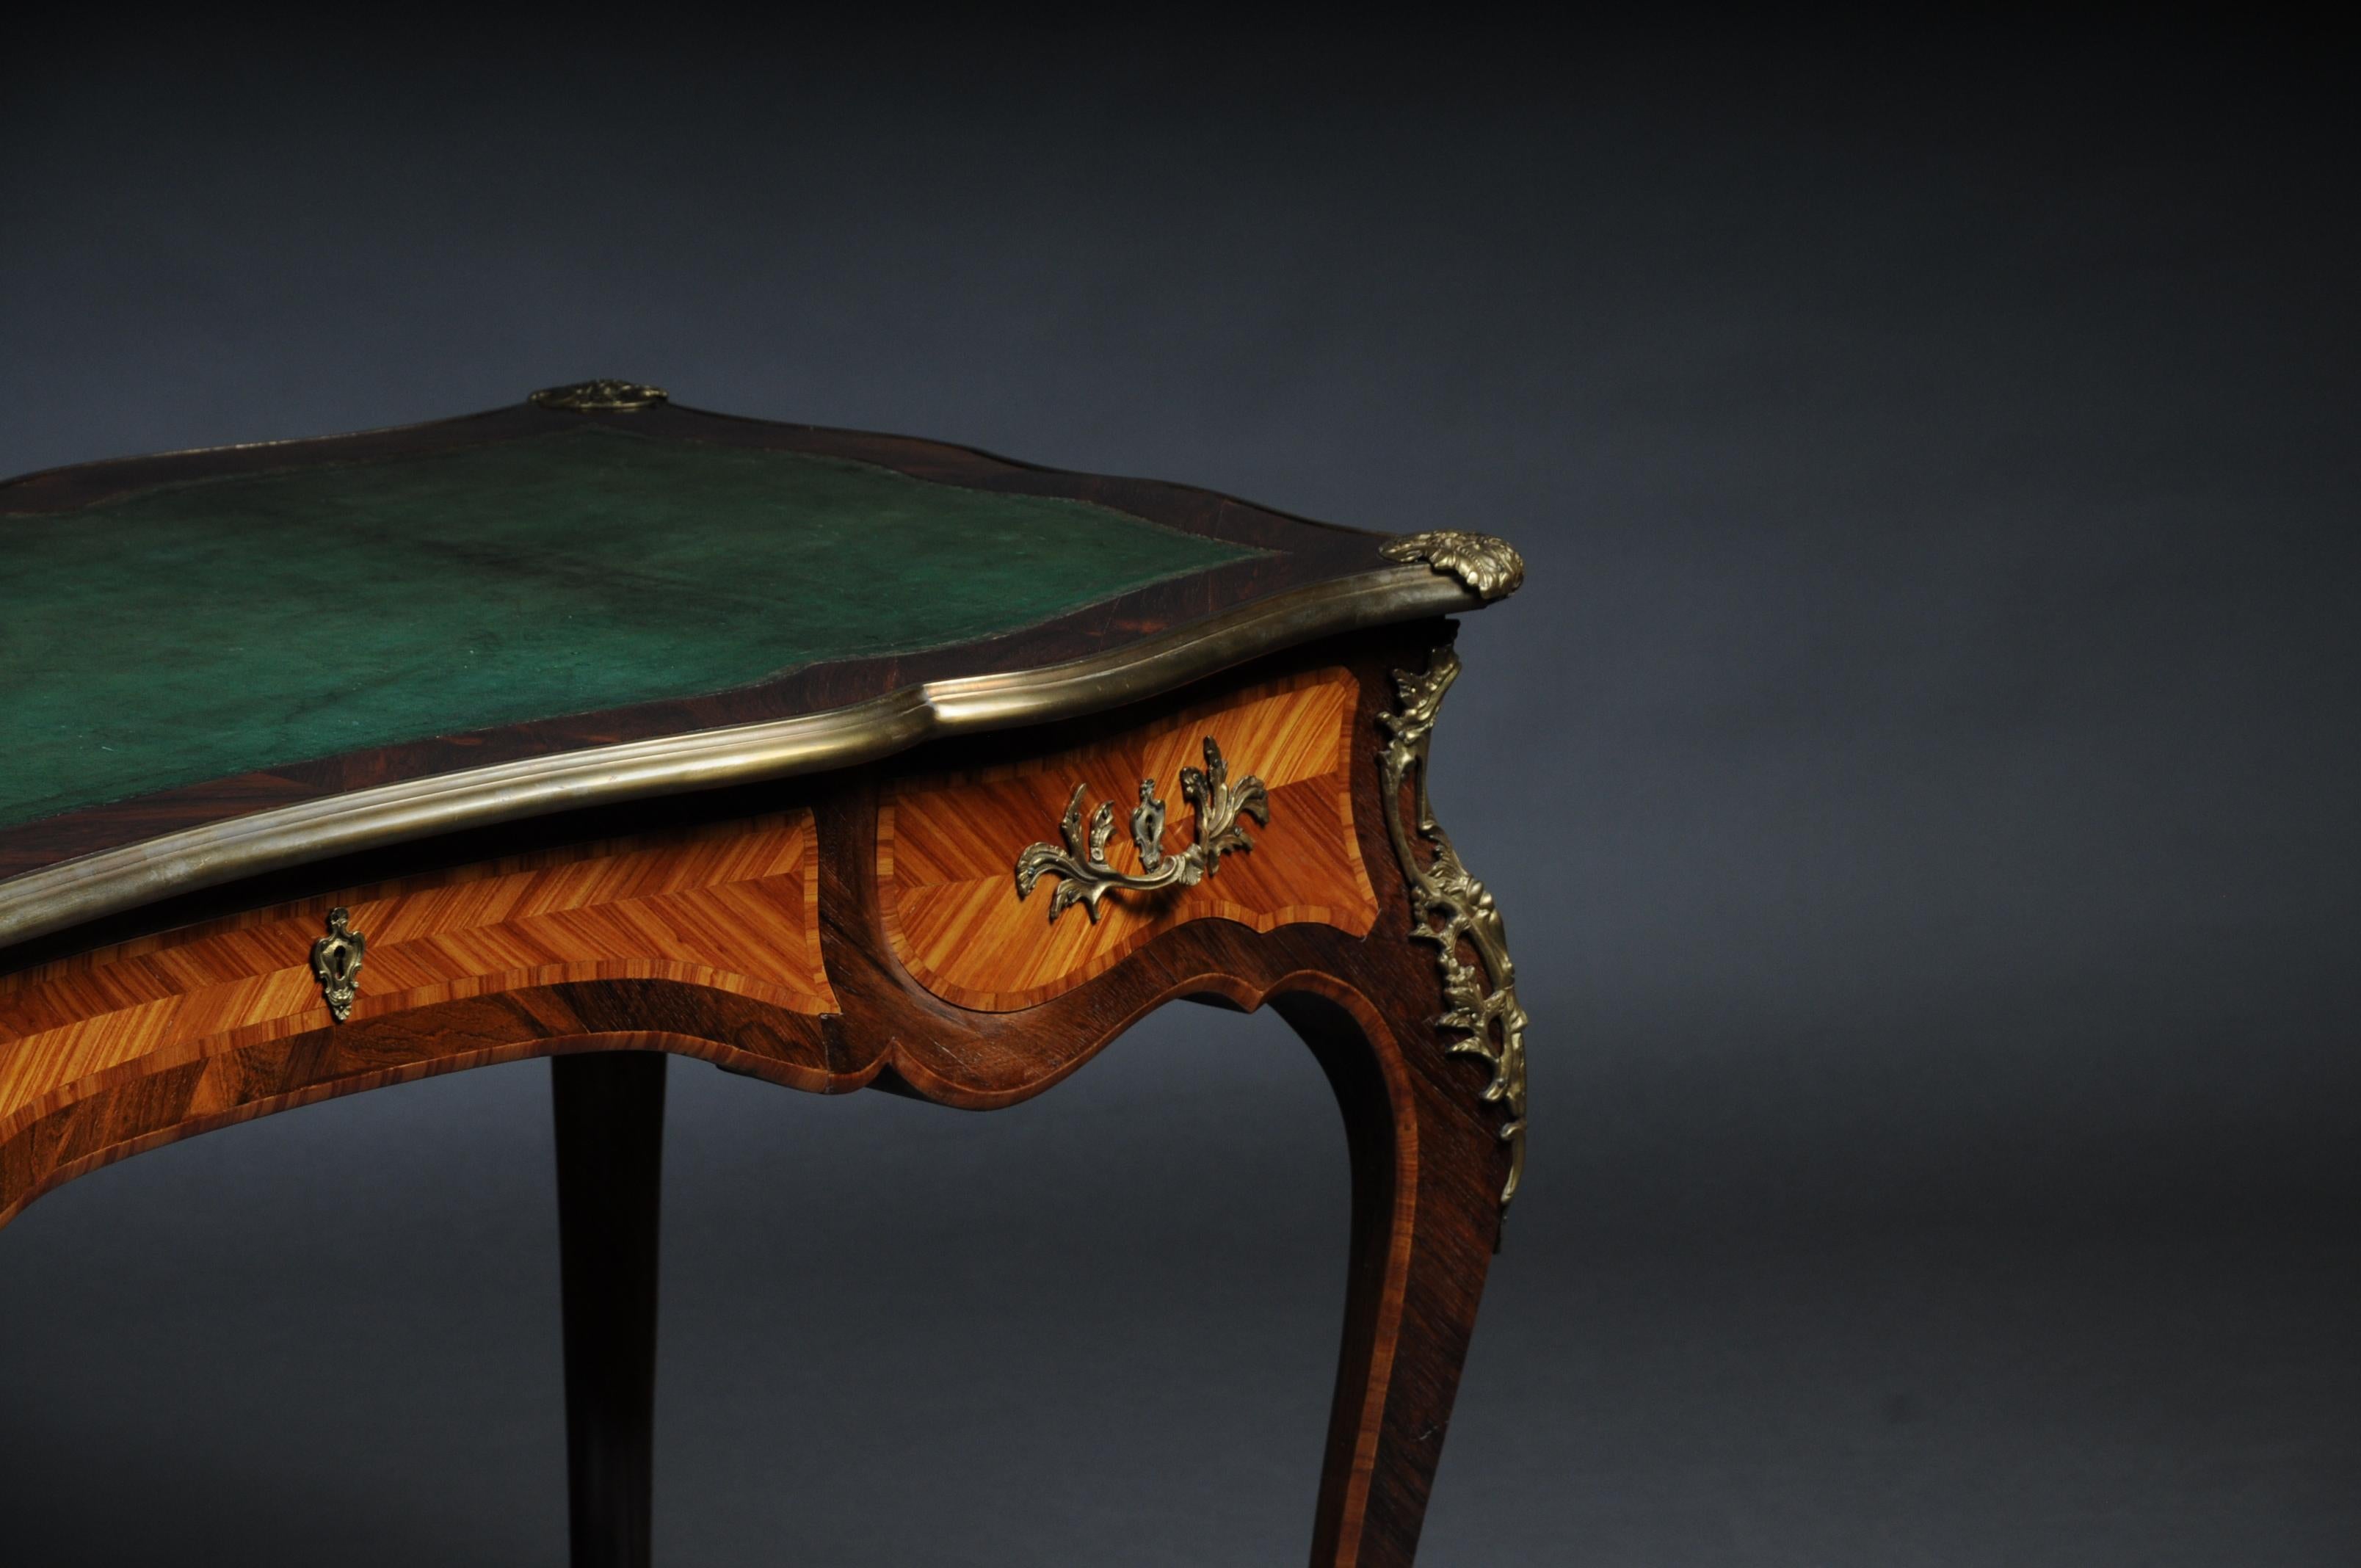 Veneer Glorious Bureau Plat or Desk in Louis XV